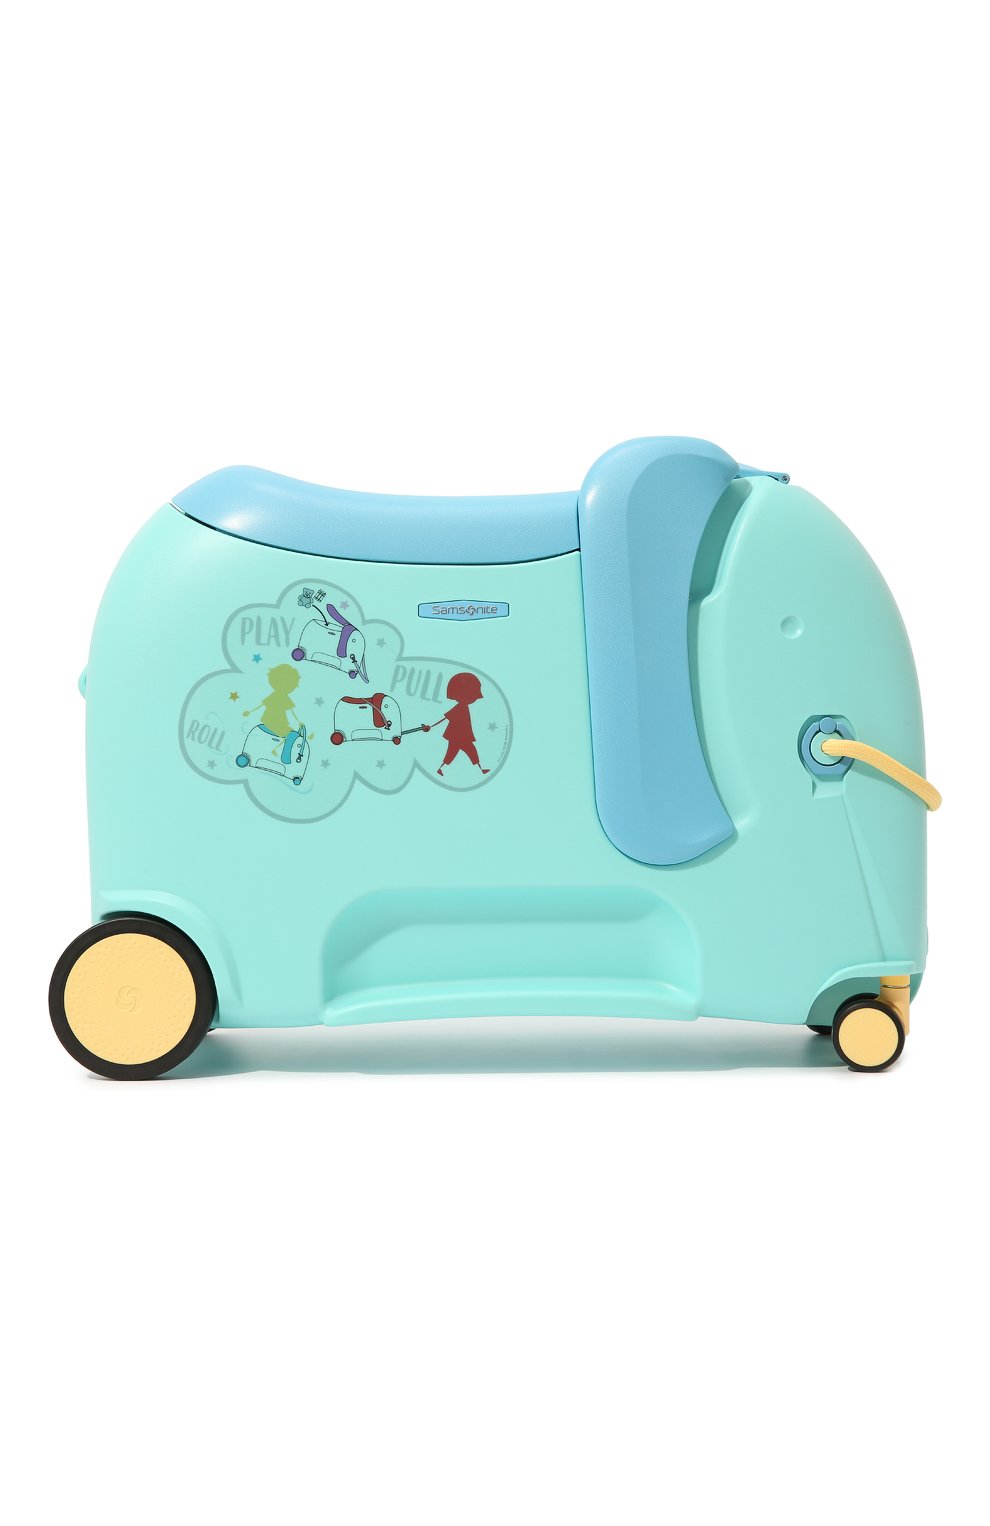  чемодан на колесиках SAMSONITE детский голубого цвета —  .